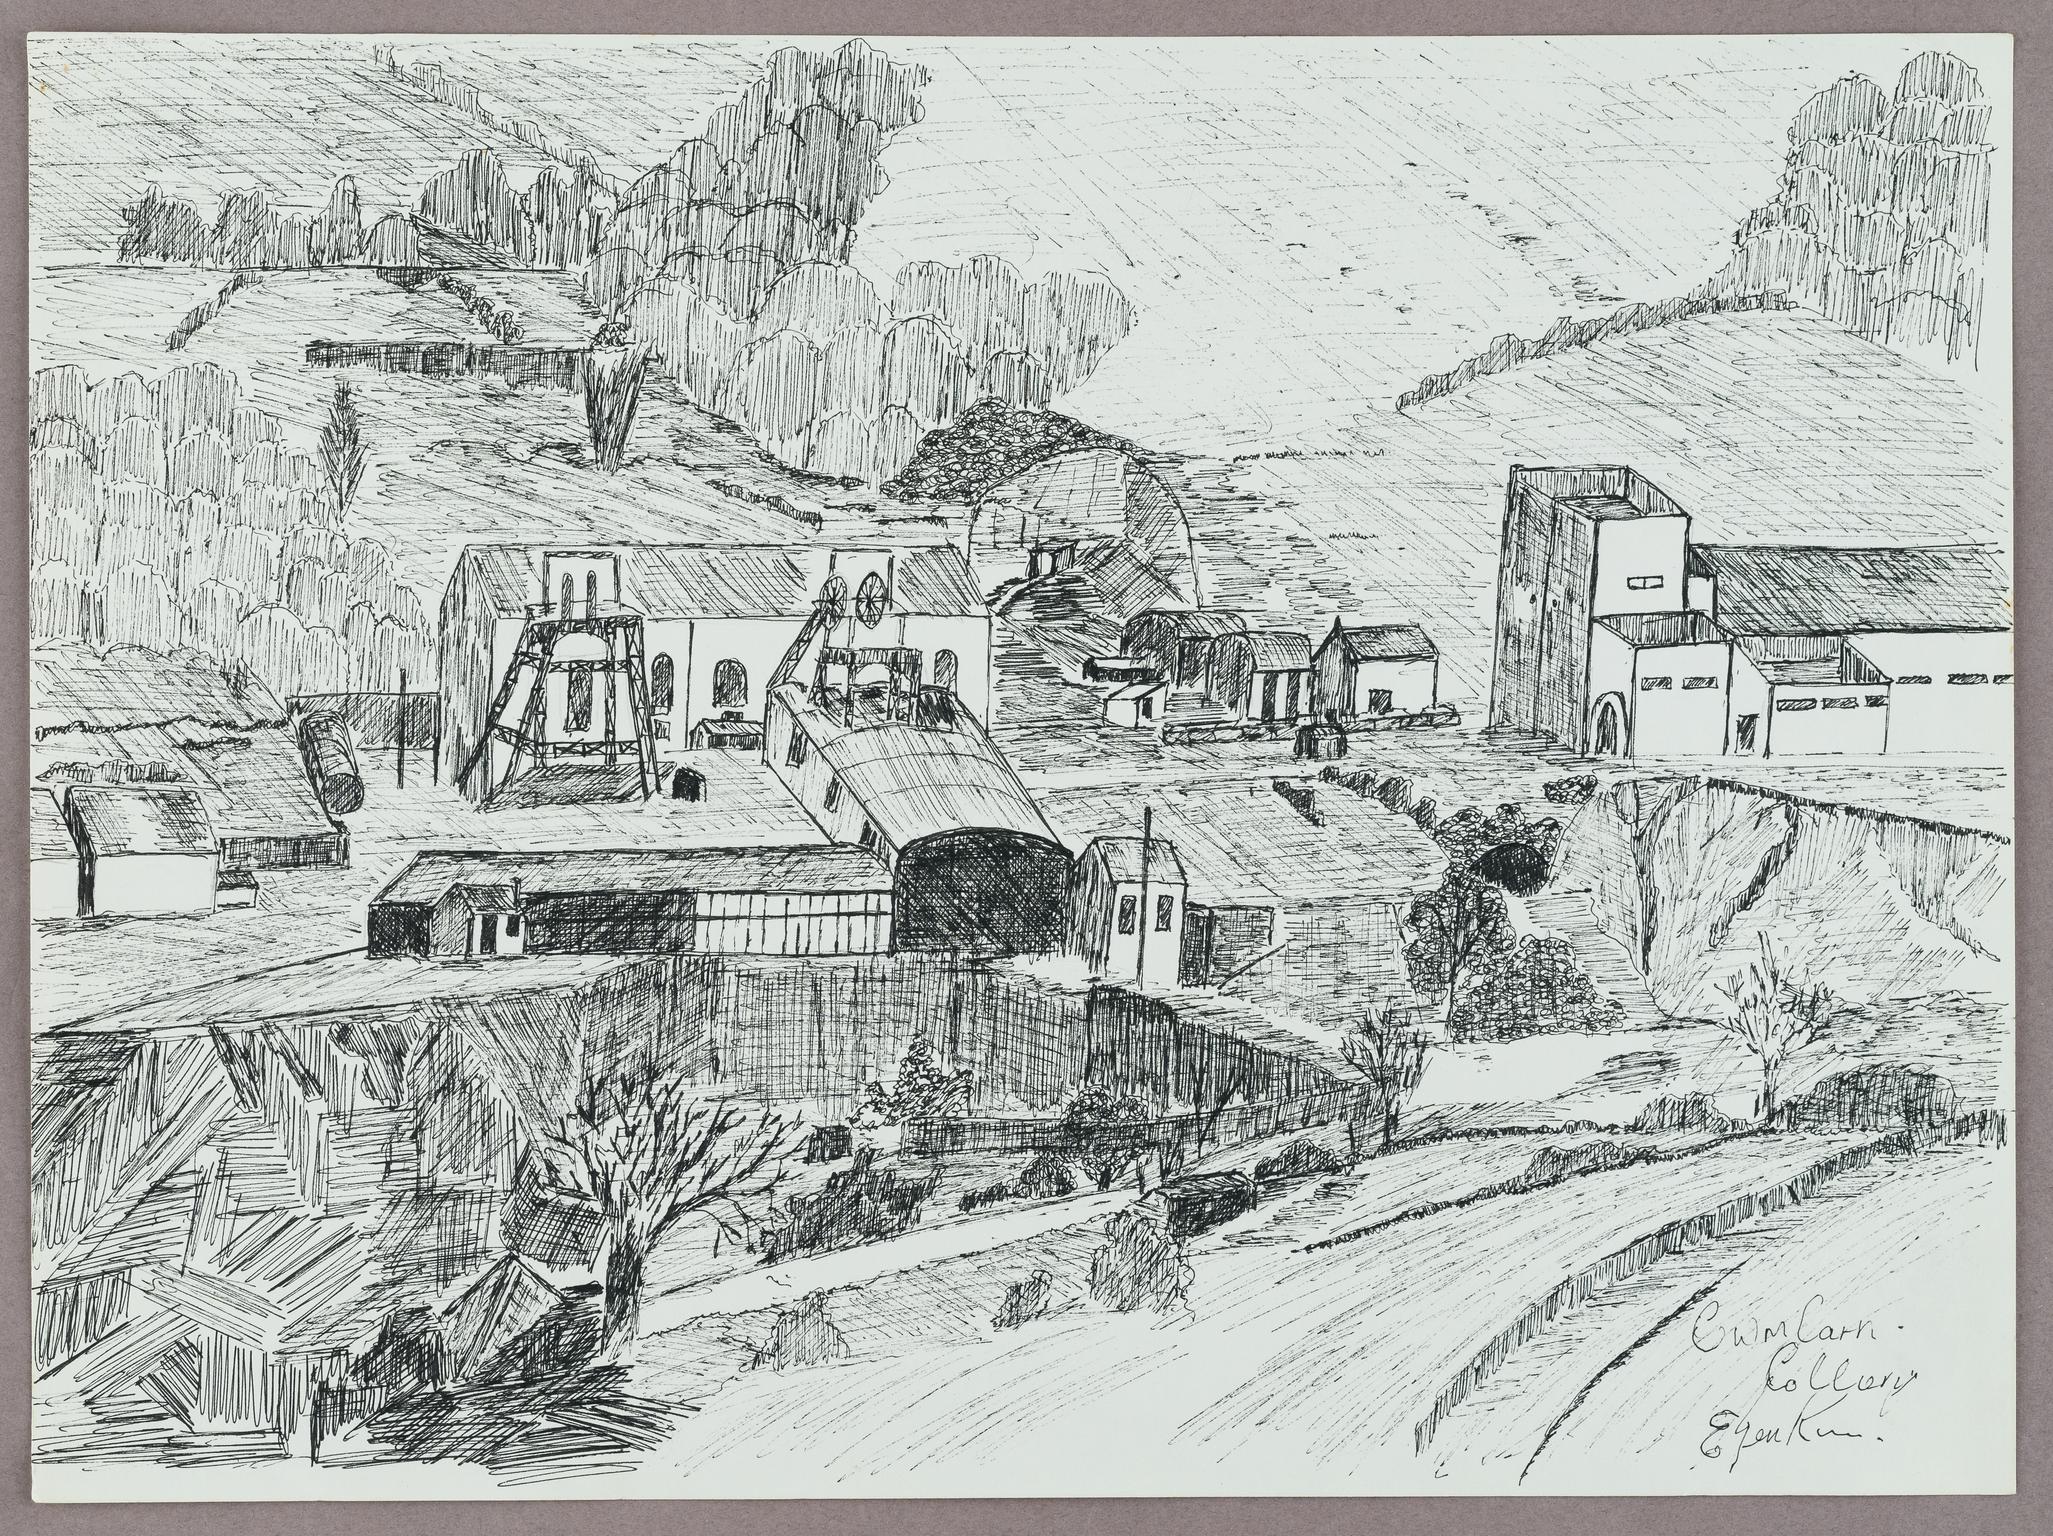 CwmCarn Colliery (drawing)